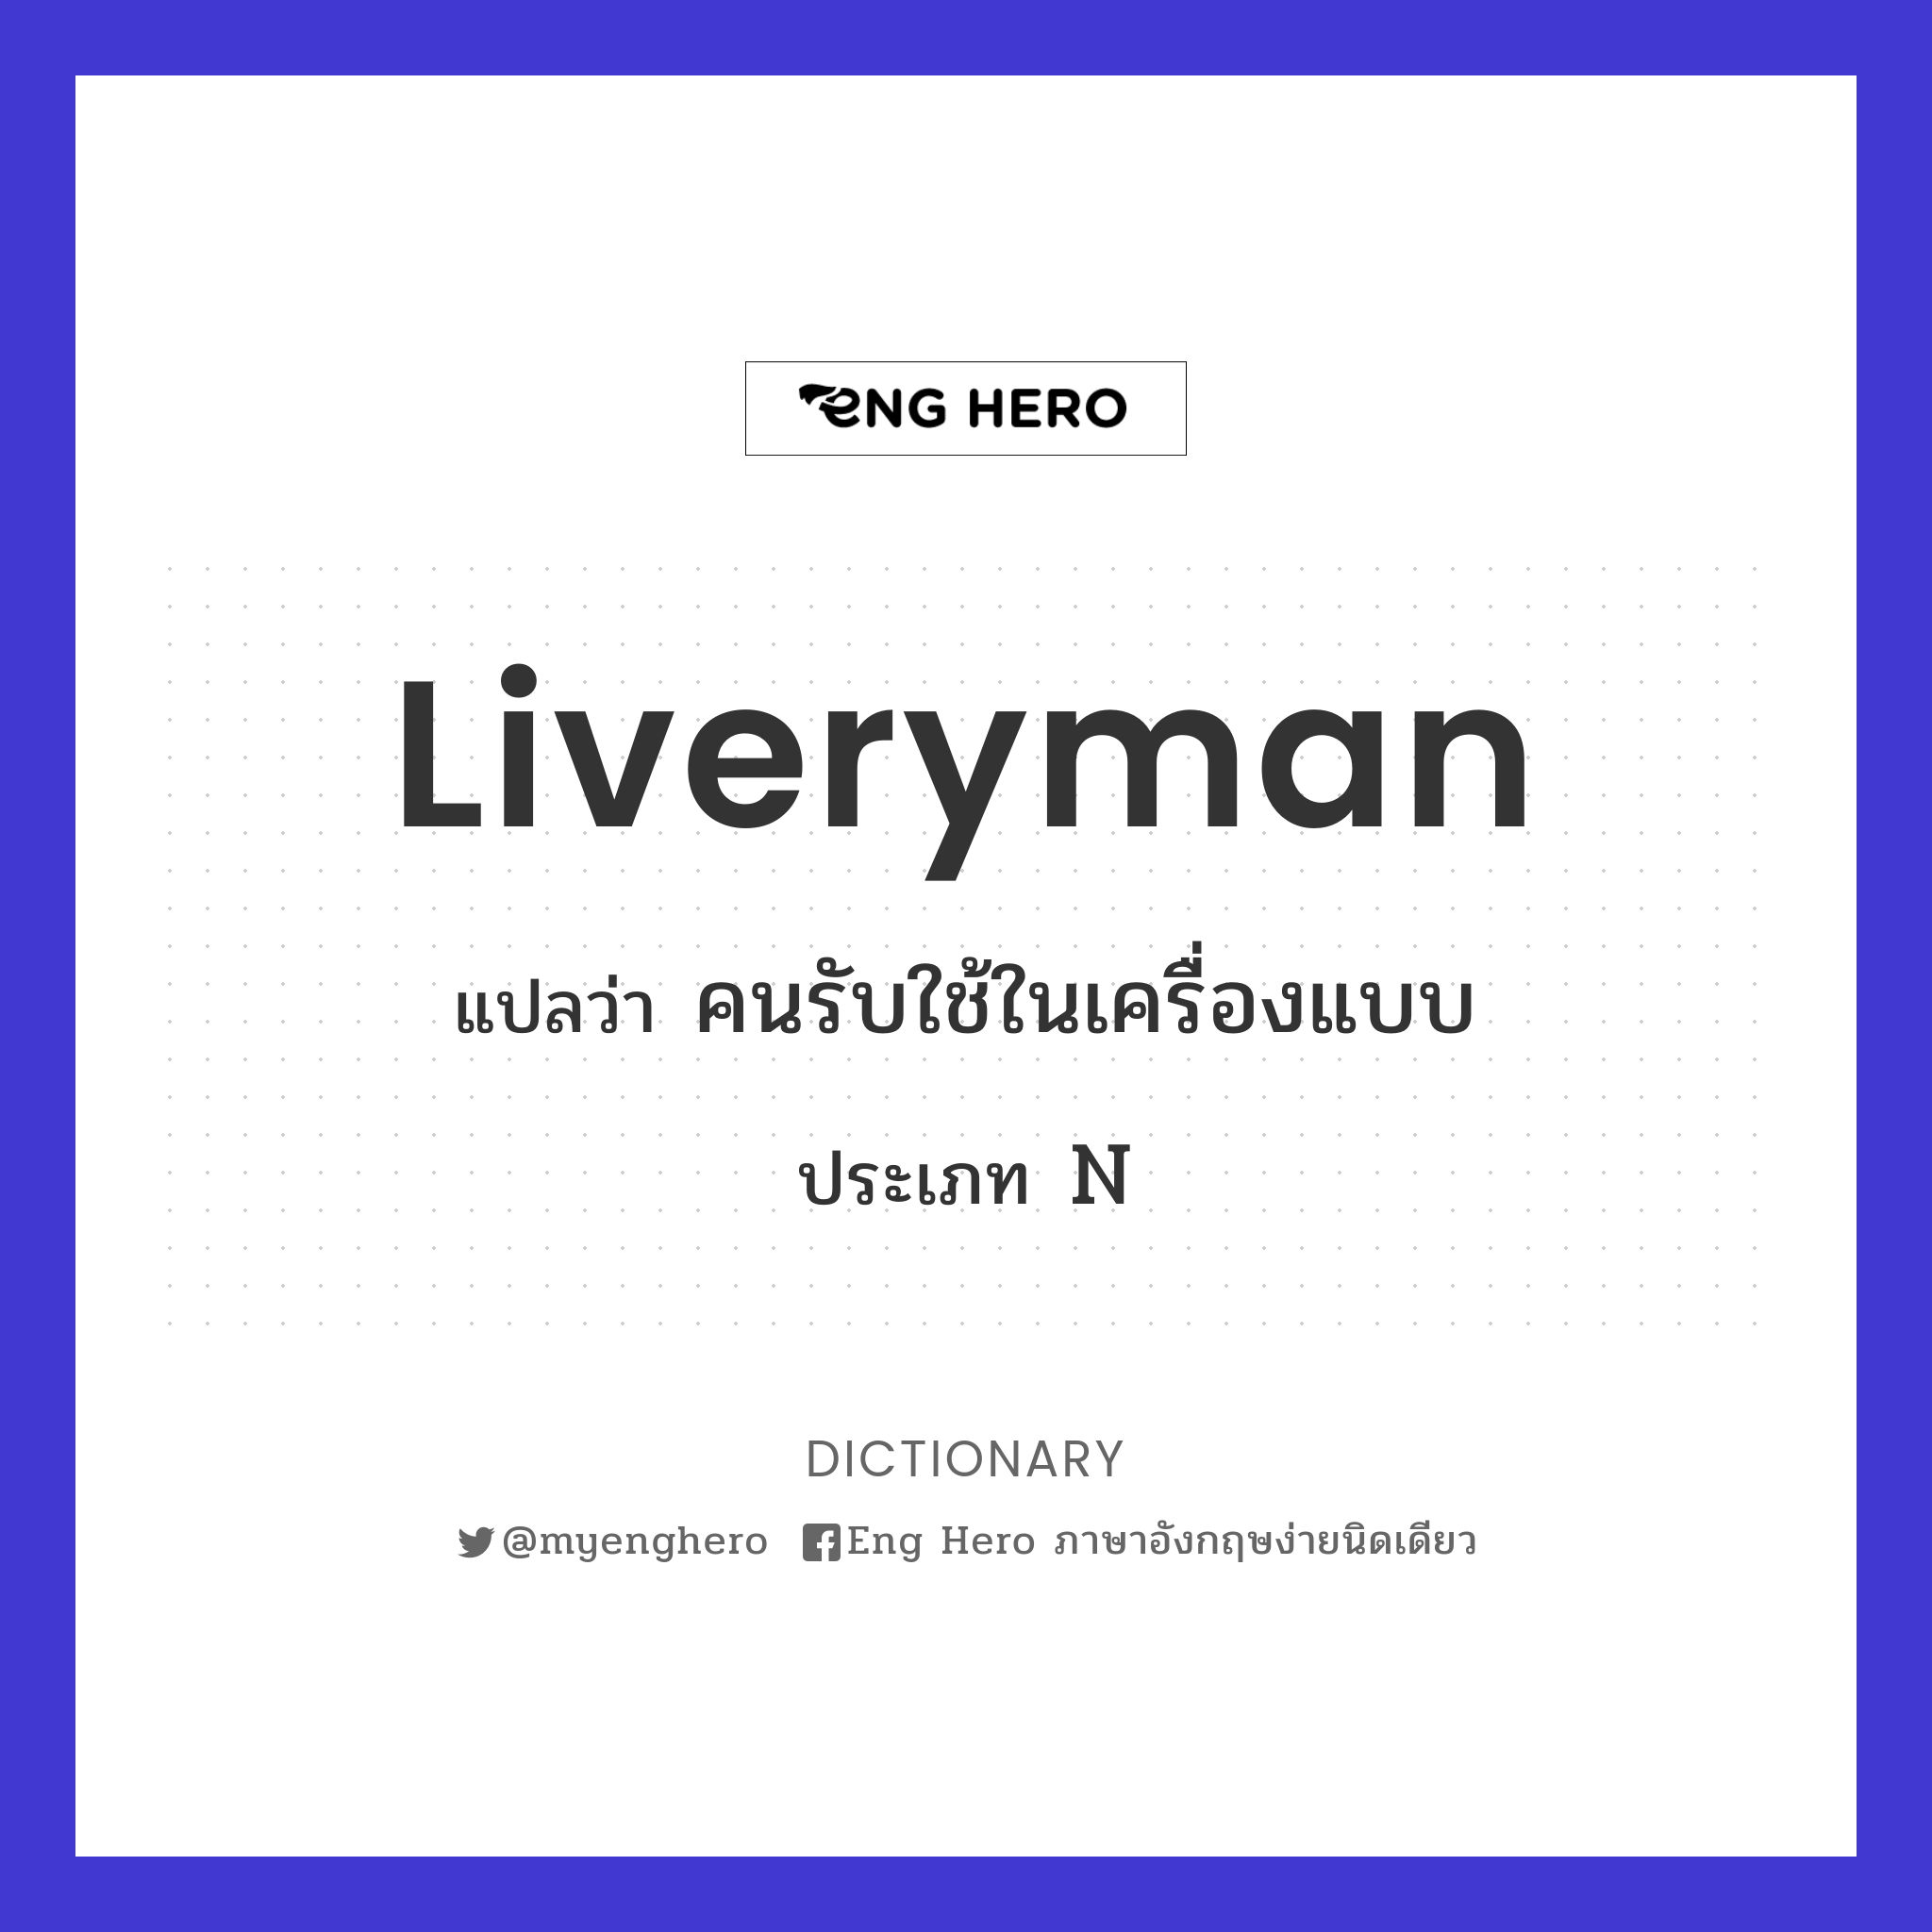 liveryman